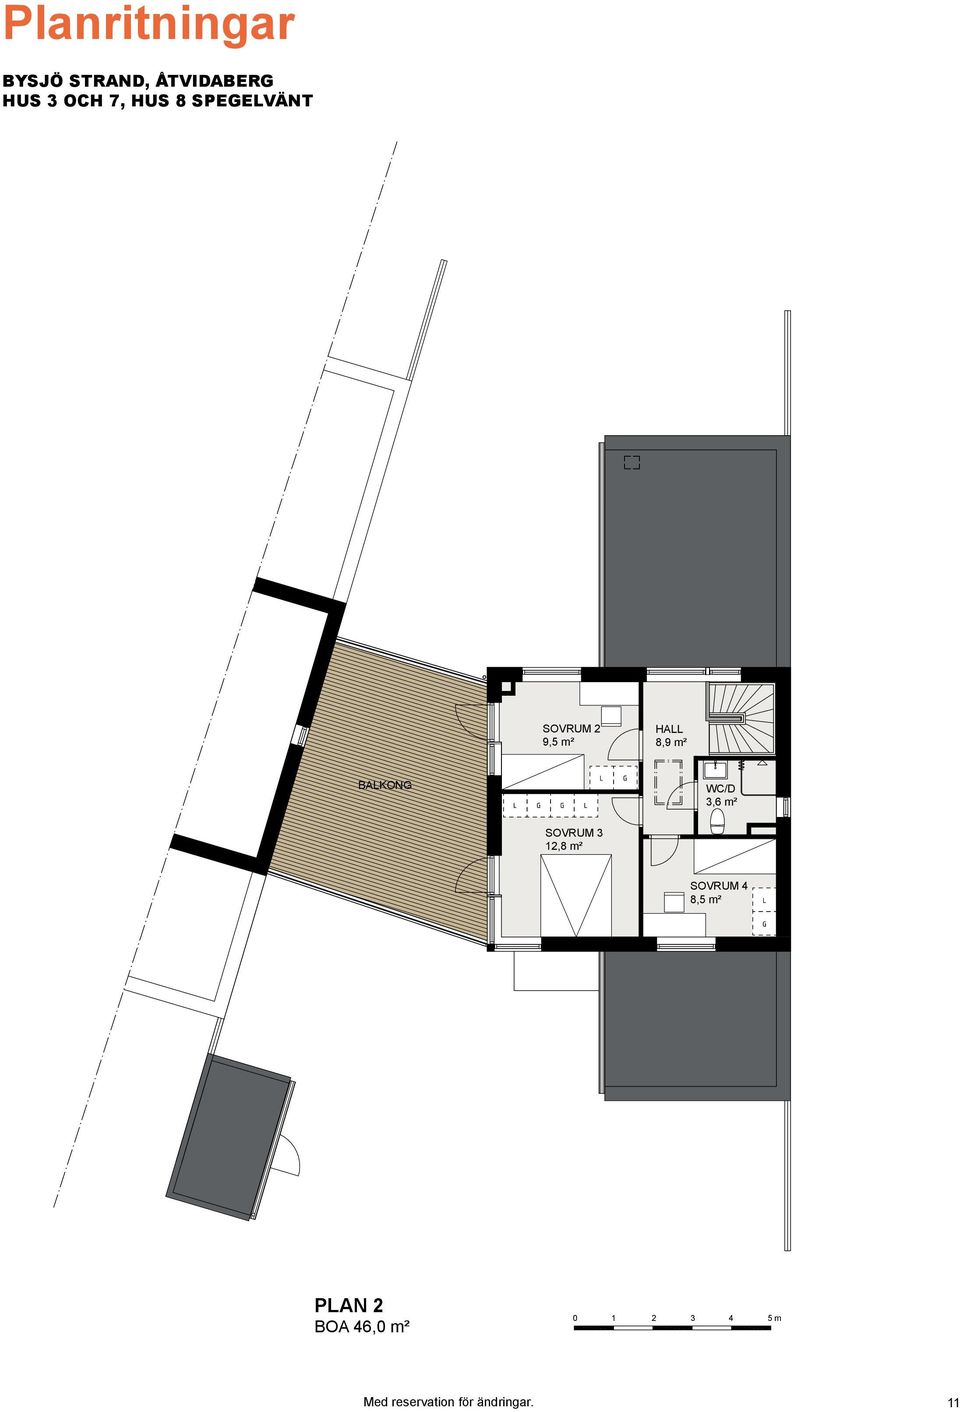 SOVRUM 3 12,8 m² SOVRUM 4 8,5 m² PLAN 2 BOA 46,0 m² 0 1 2 3 4